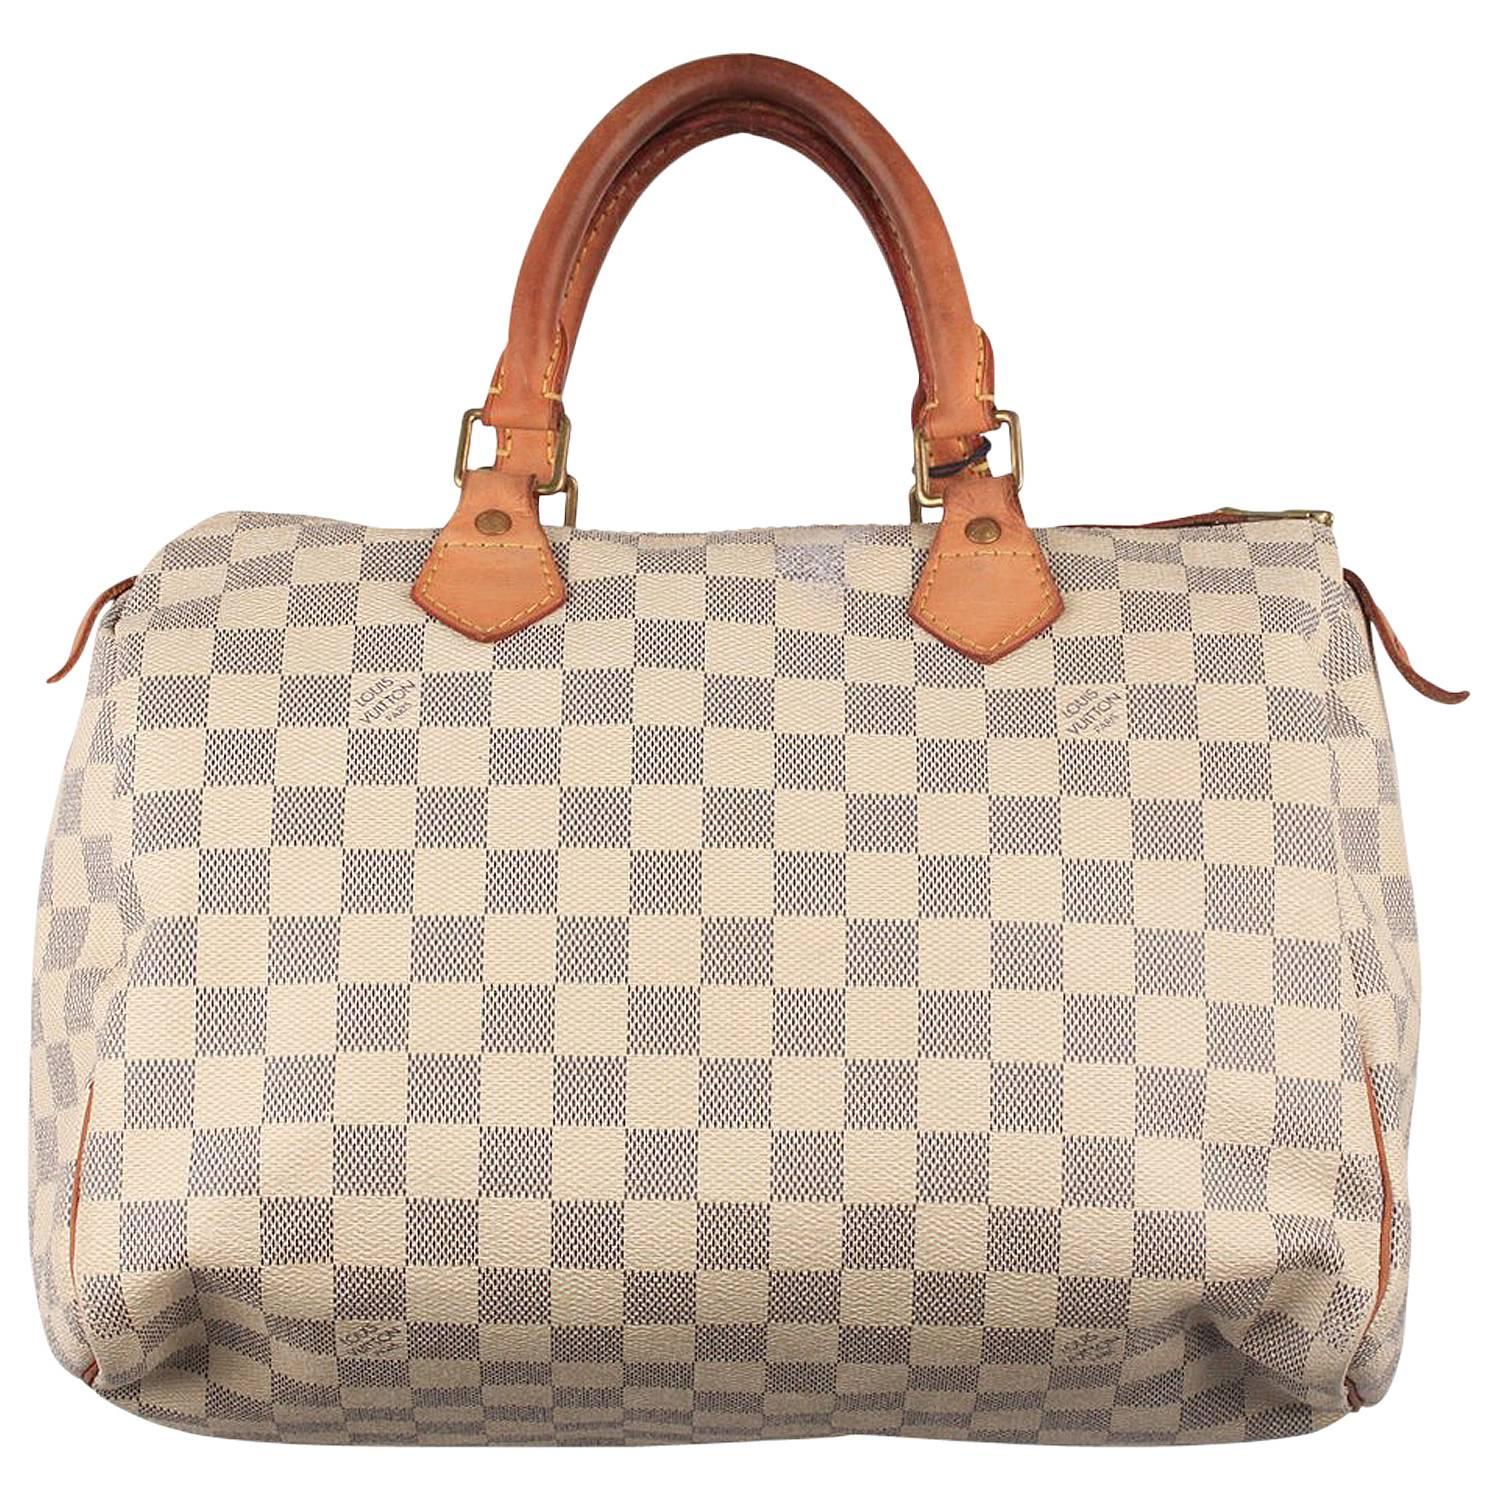 Louis Vuitton Damier Azur Canvas Speedy 30 Handbag